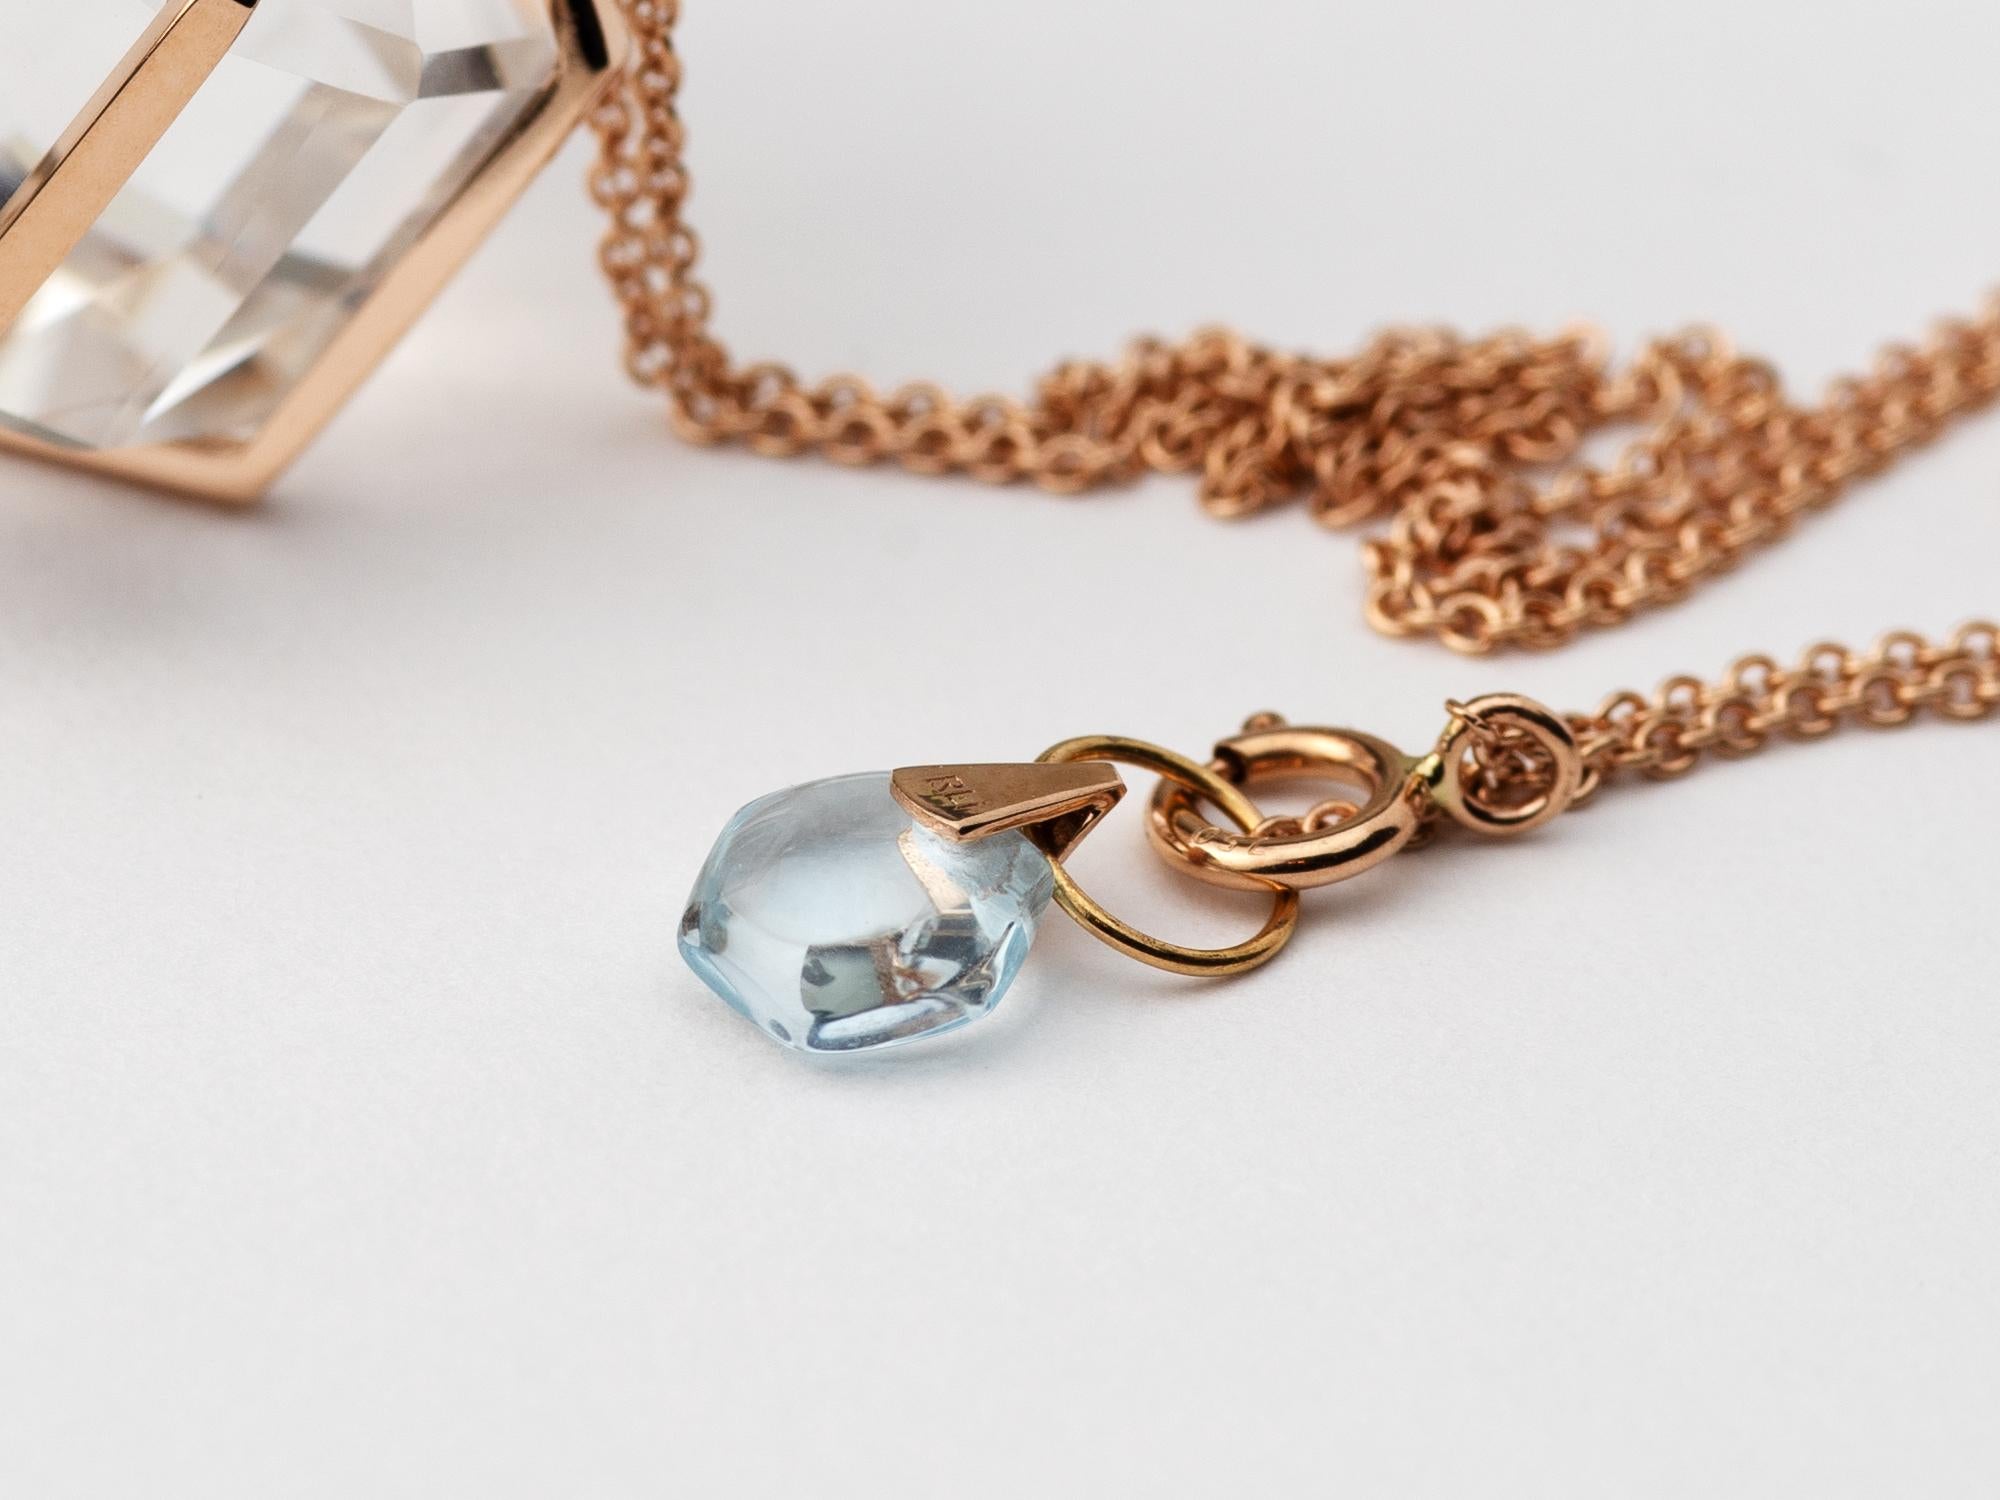 Mixed Cut Rebecca Li Six Senses Talisman Necklace 18k Rose Gold Large Natural Rock Crystal For Sale